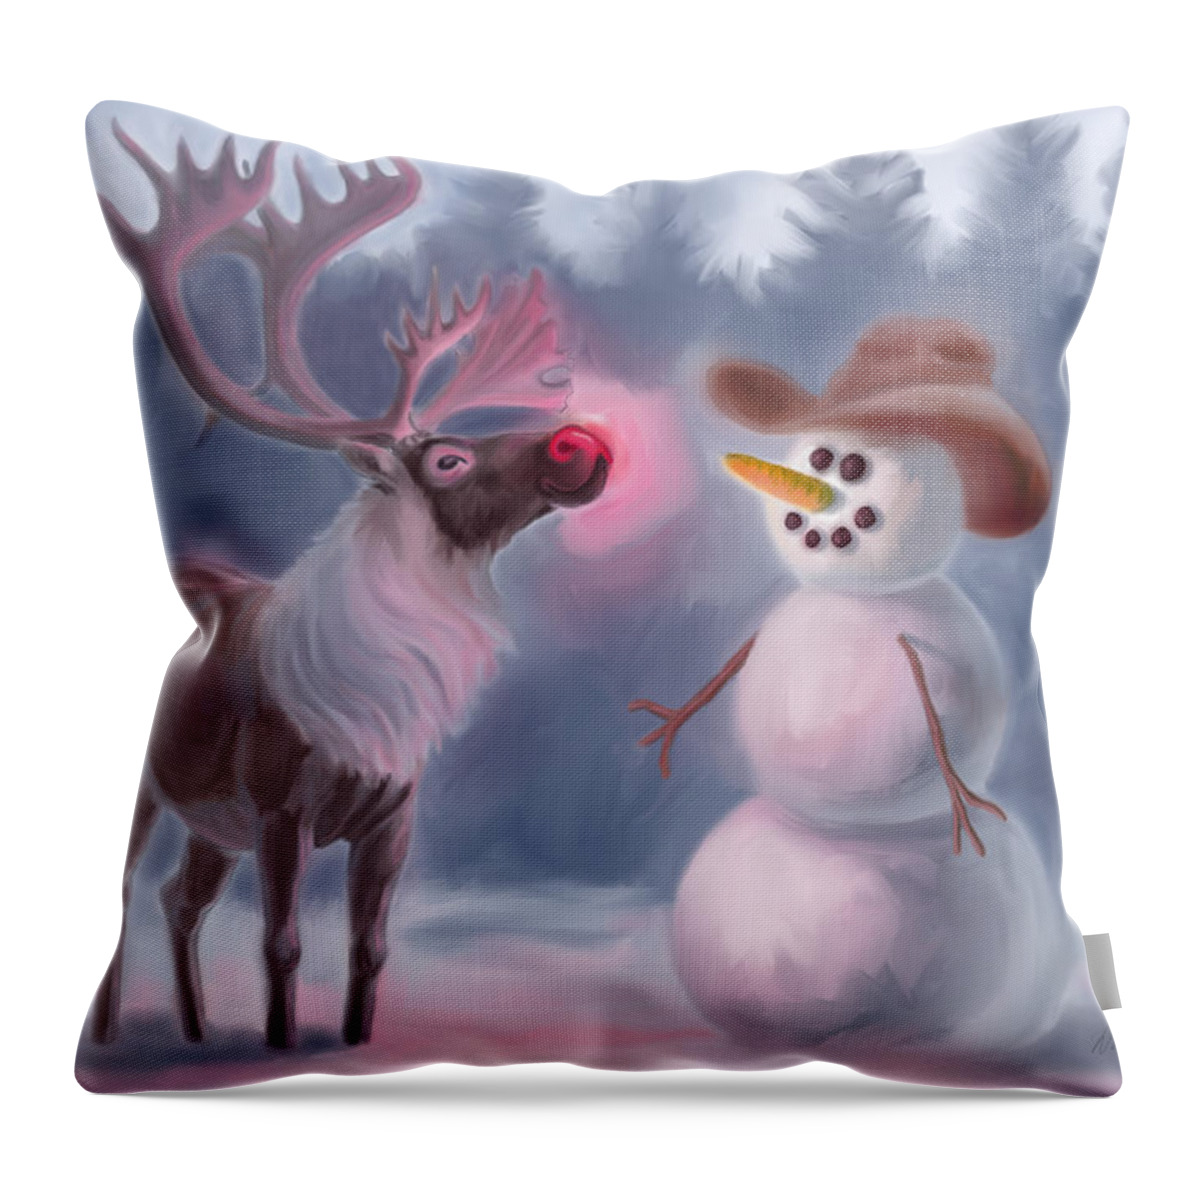 Rudolph Throw Pillow featuring the digital art Rudolph Meets Frosty by David Burgess